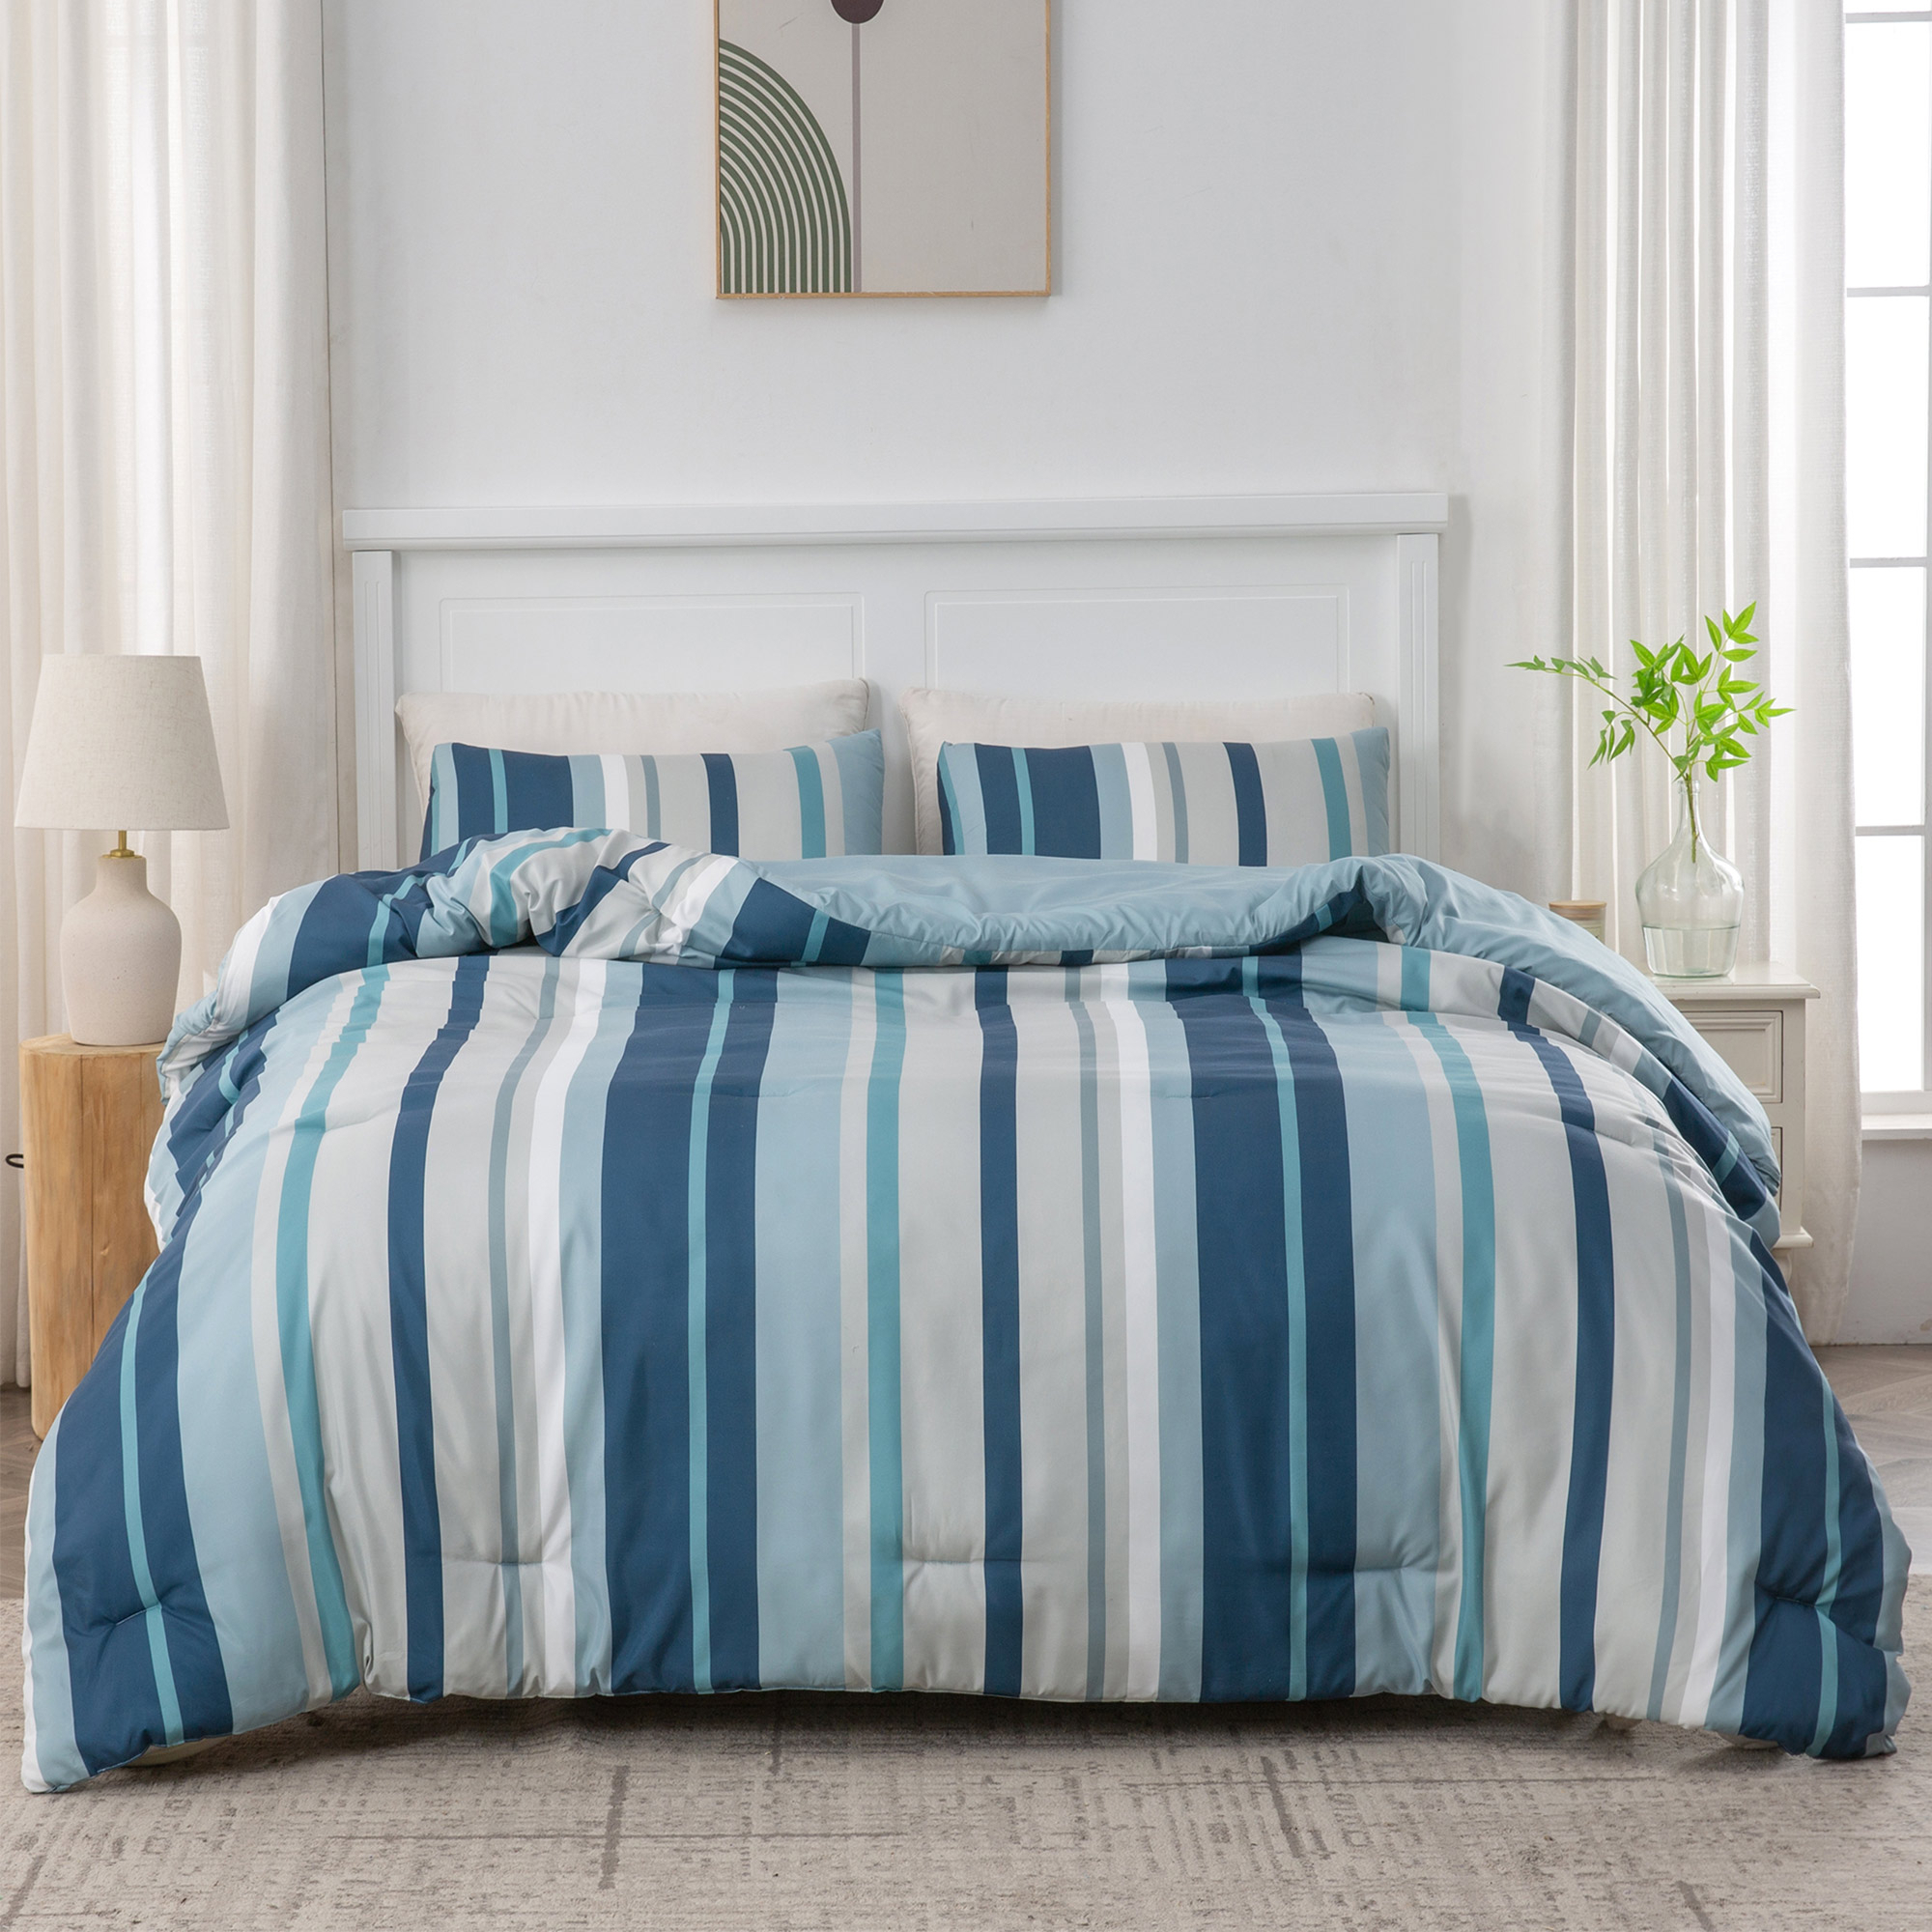 Printed Stripe Microfiber Comforter Set - All-Season Warmth, Blue - Full/Queen